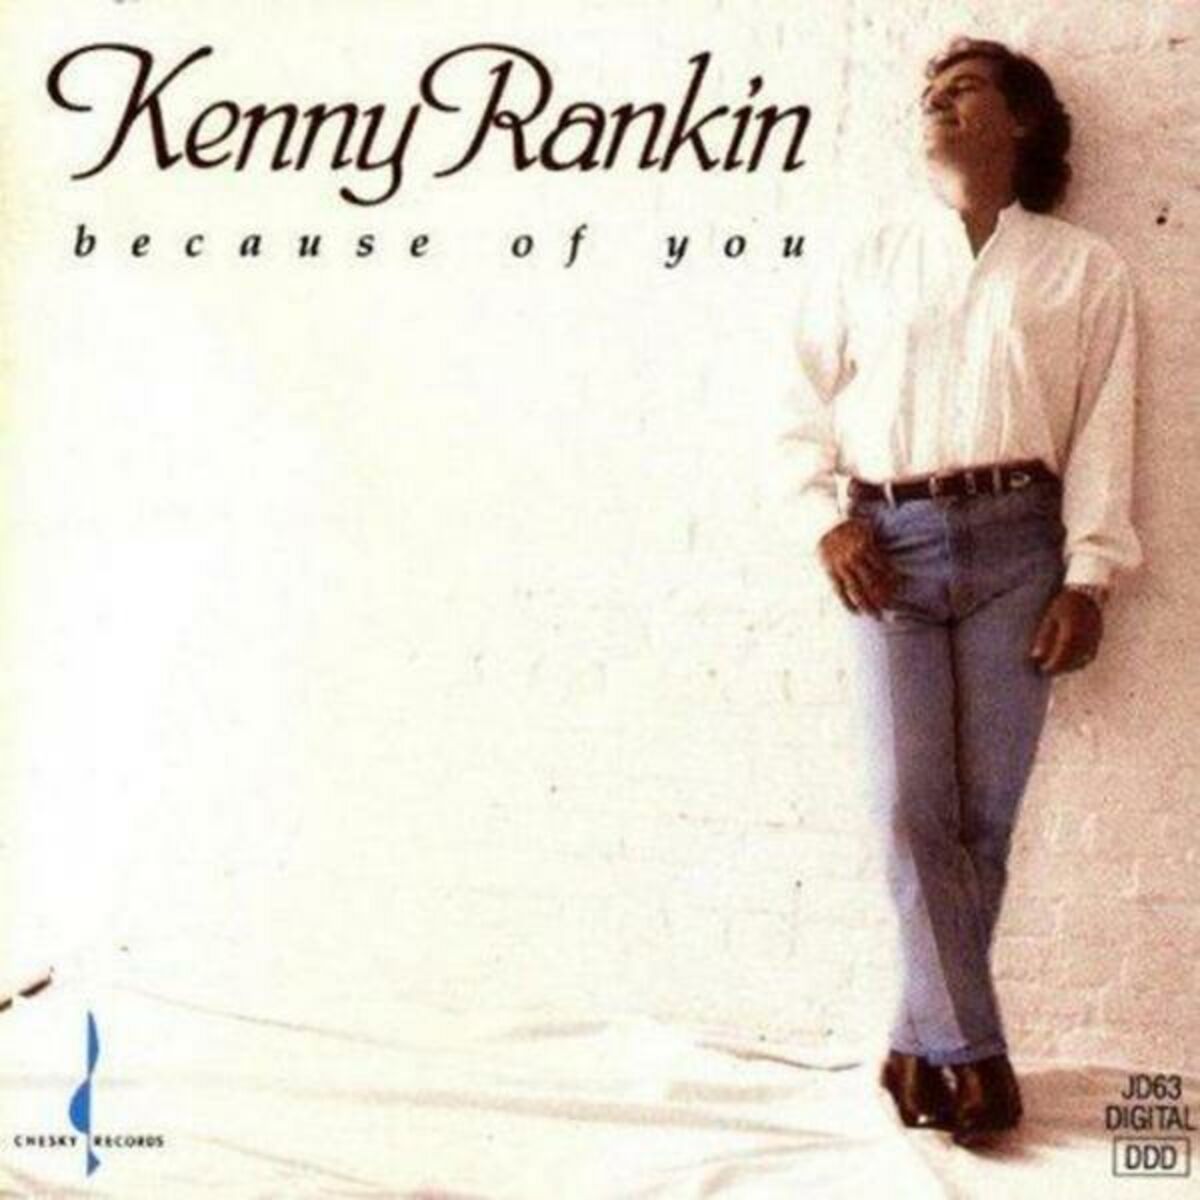 Kenny Rankin: albums, songs, playlists | Listen on Deezer